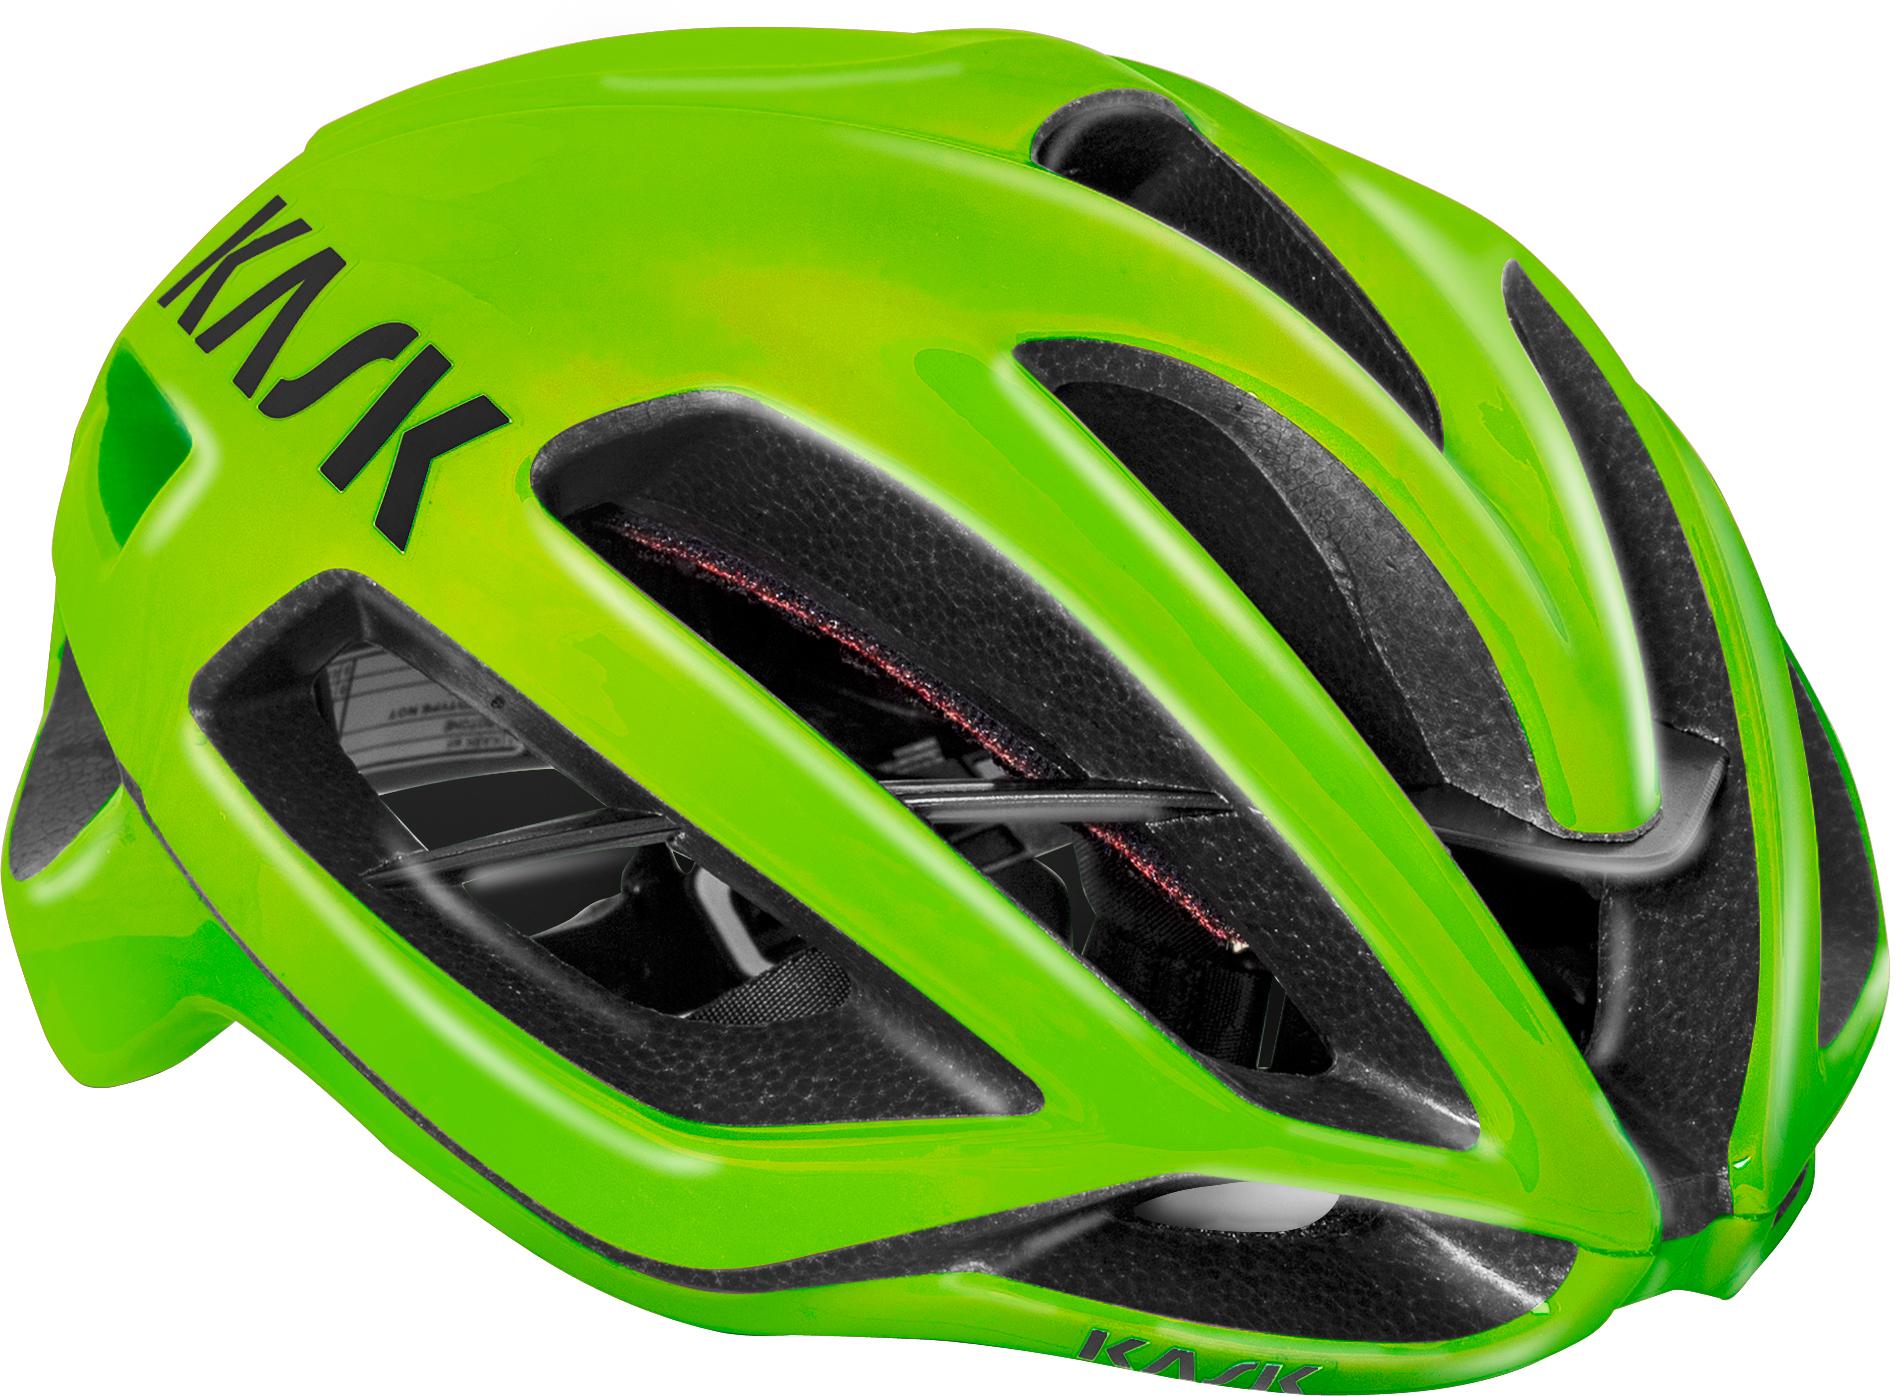 Kask Protone Road Helmet - Lime Green